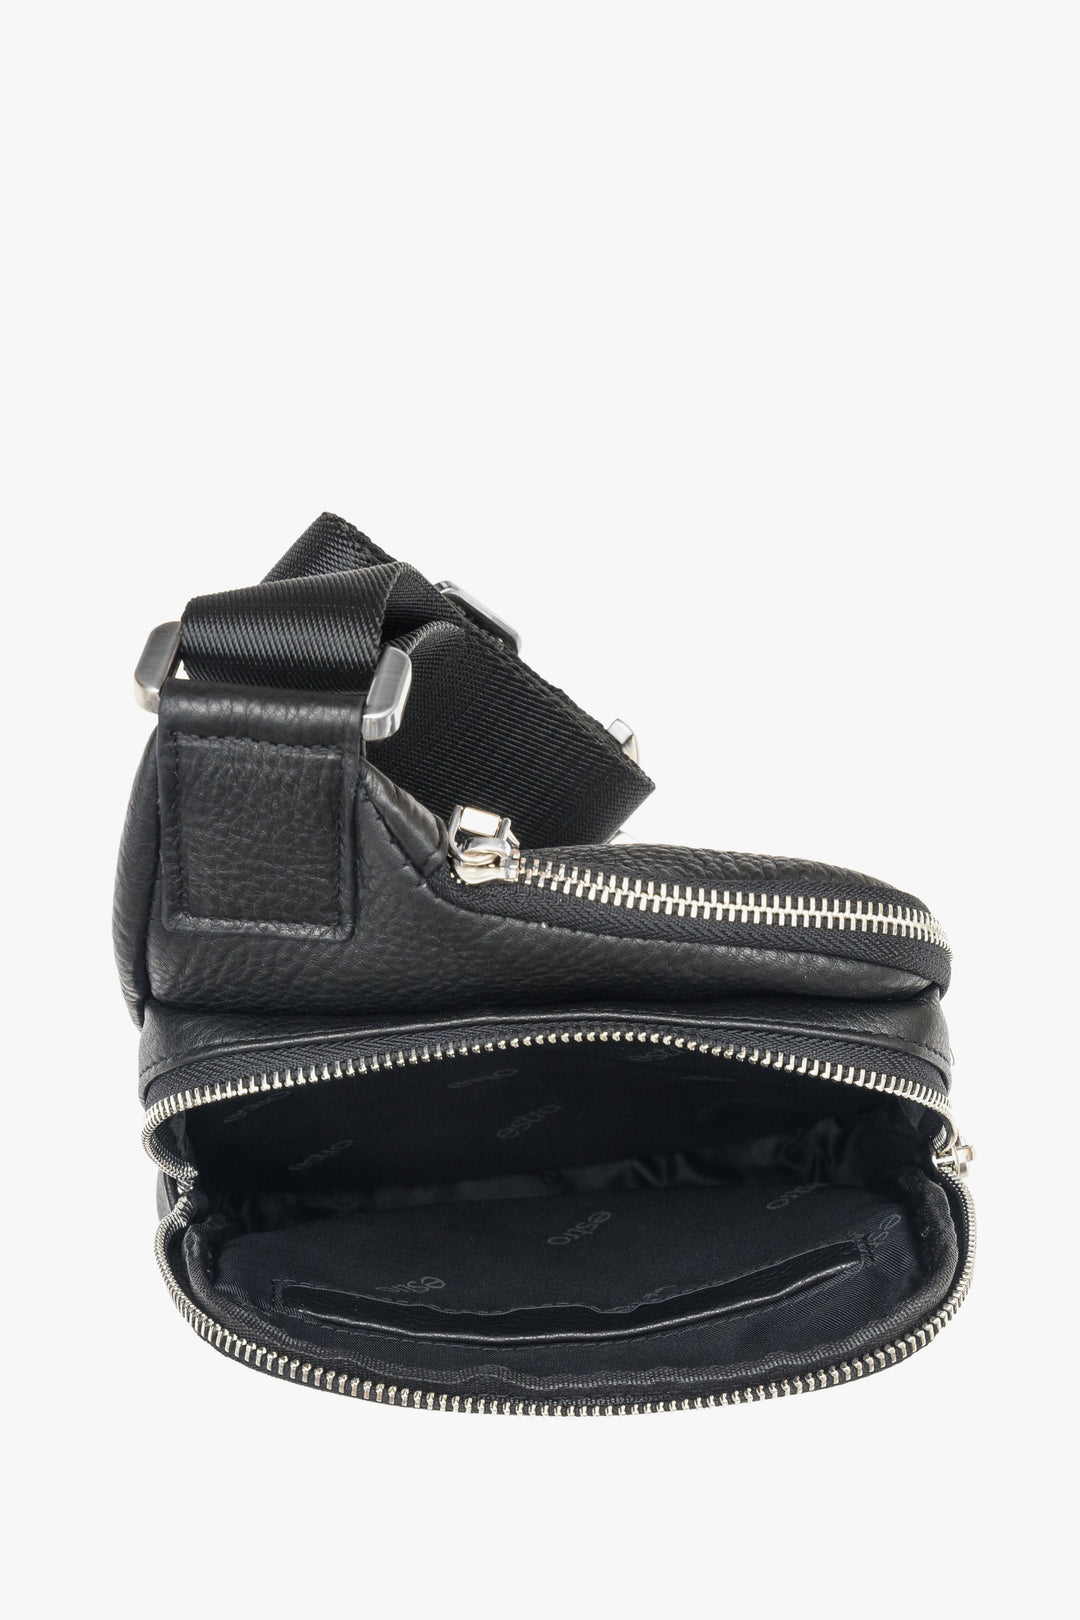 Men's black leather pouch by Estro - interior view.